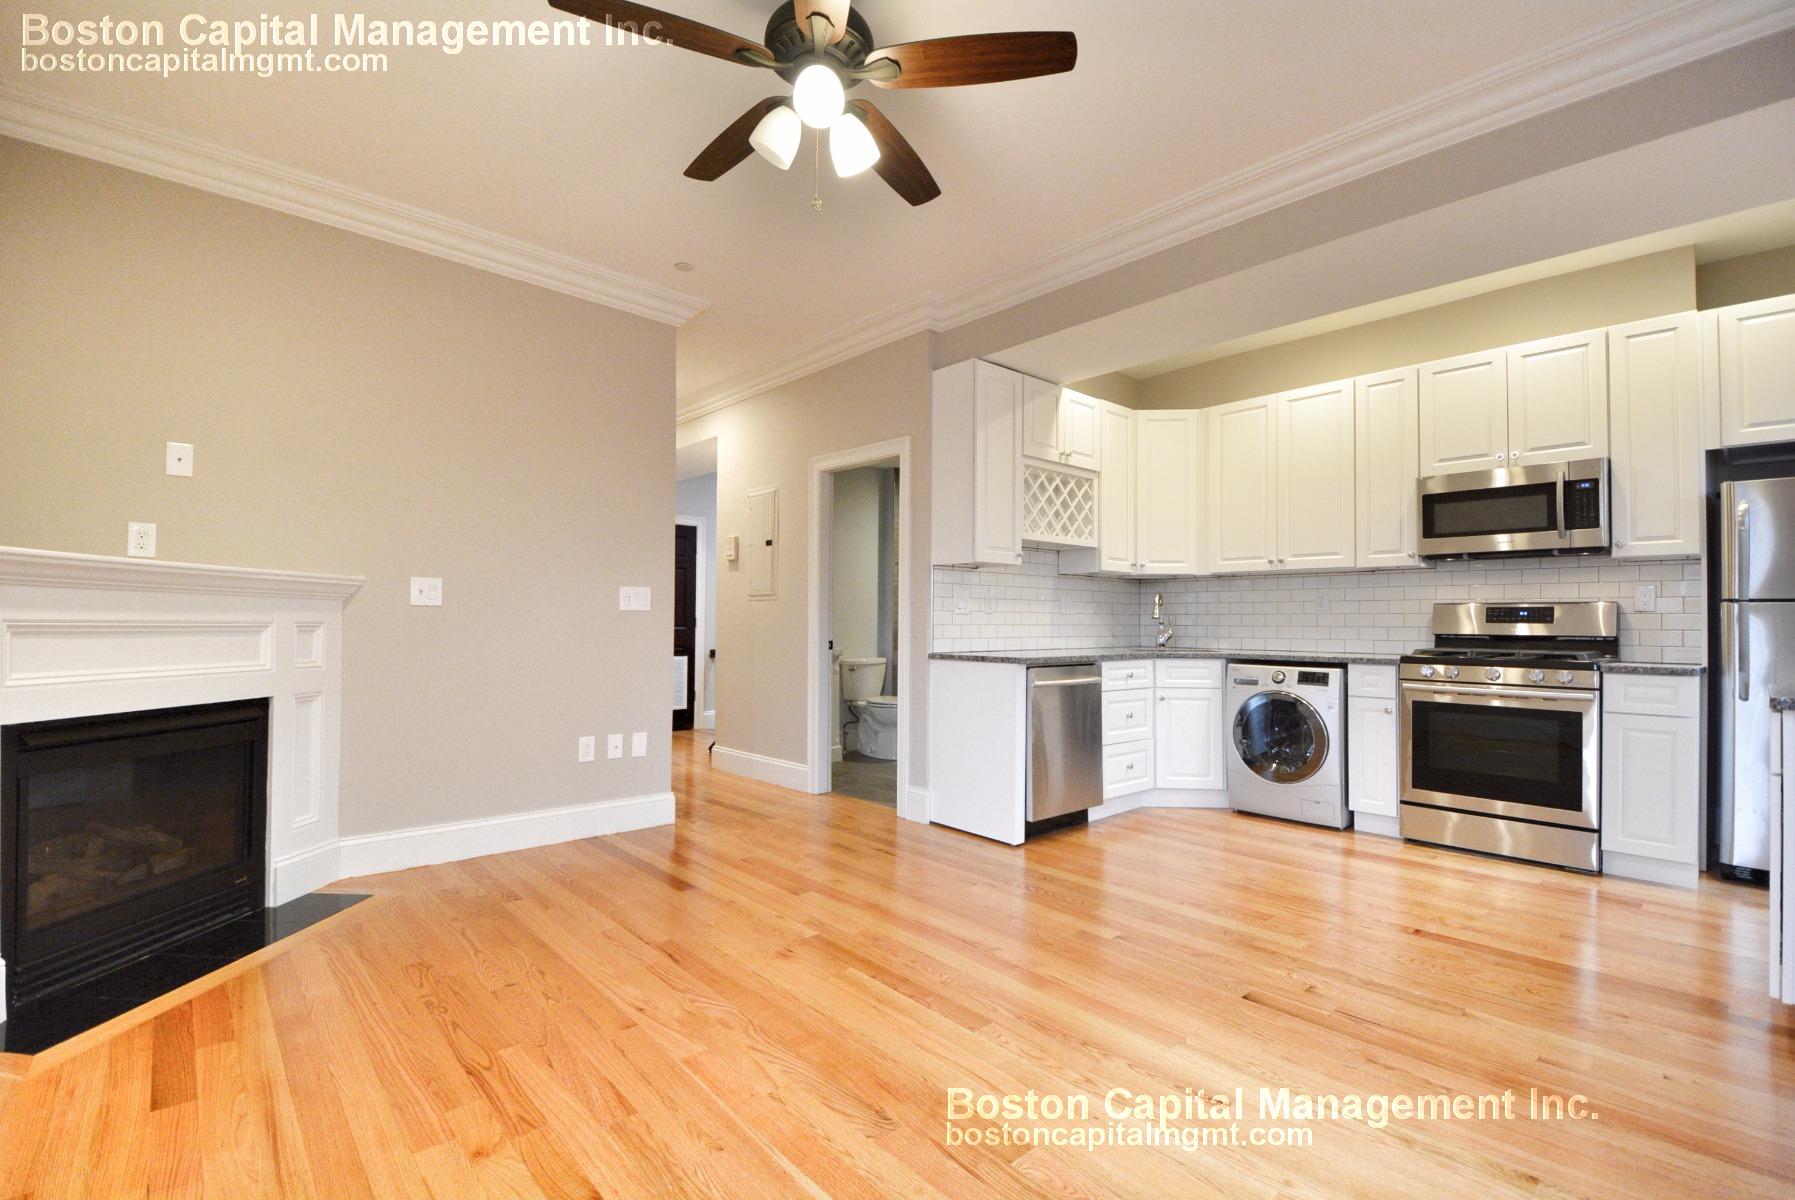 Photos of apartment on Dorchester Ave.,Boston MA 02127